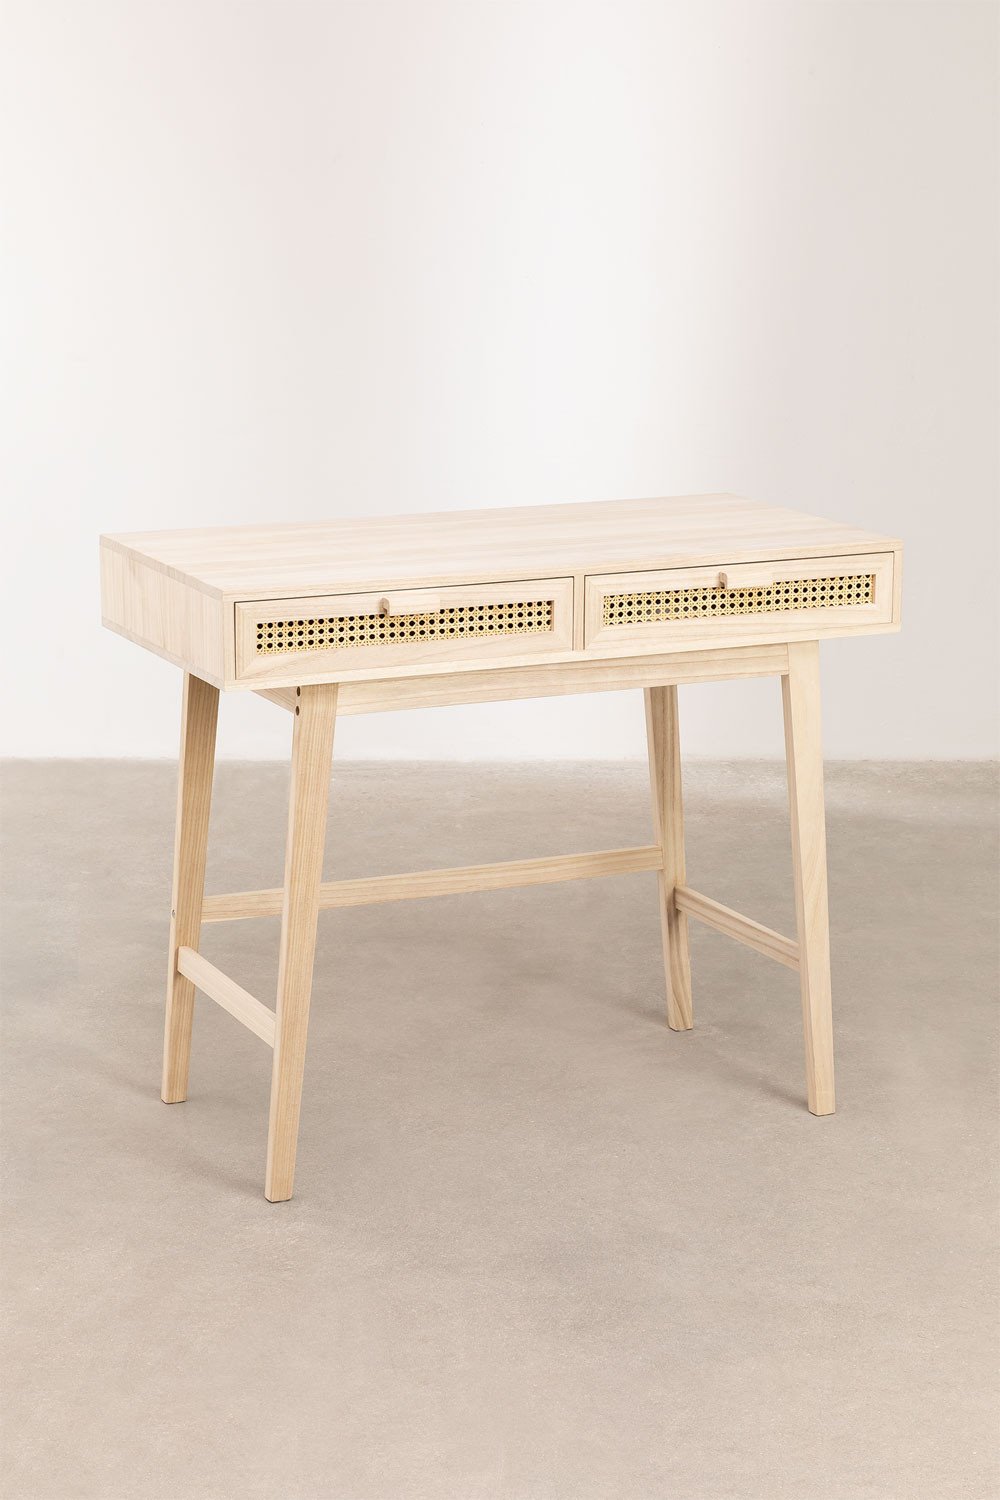 Drewniane biurko Ralik Design, obrazek w galerii 2